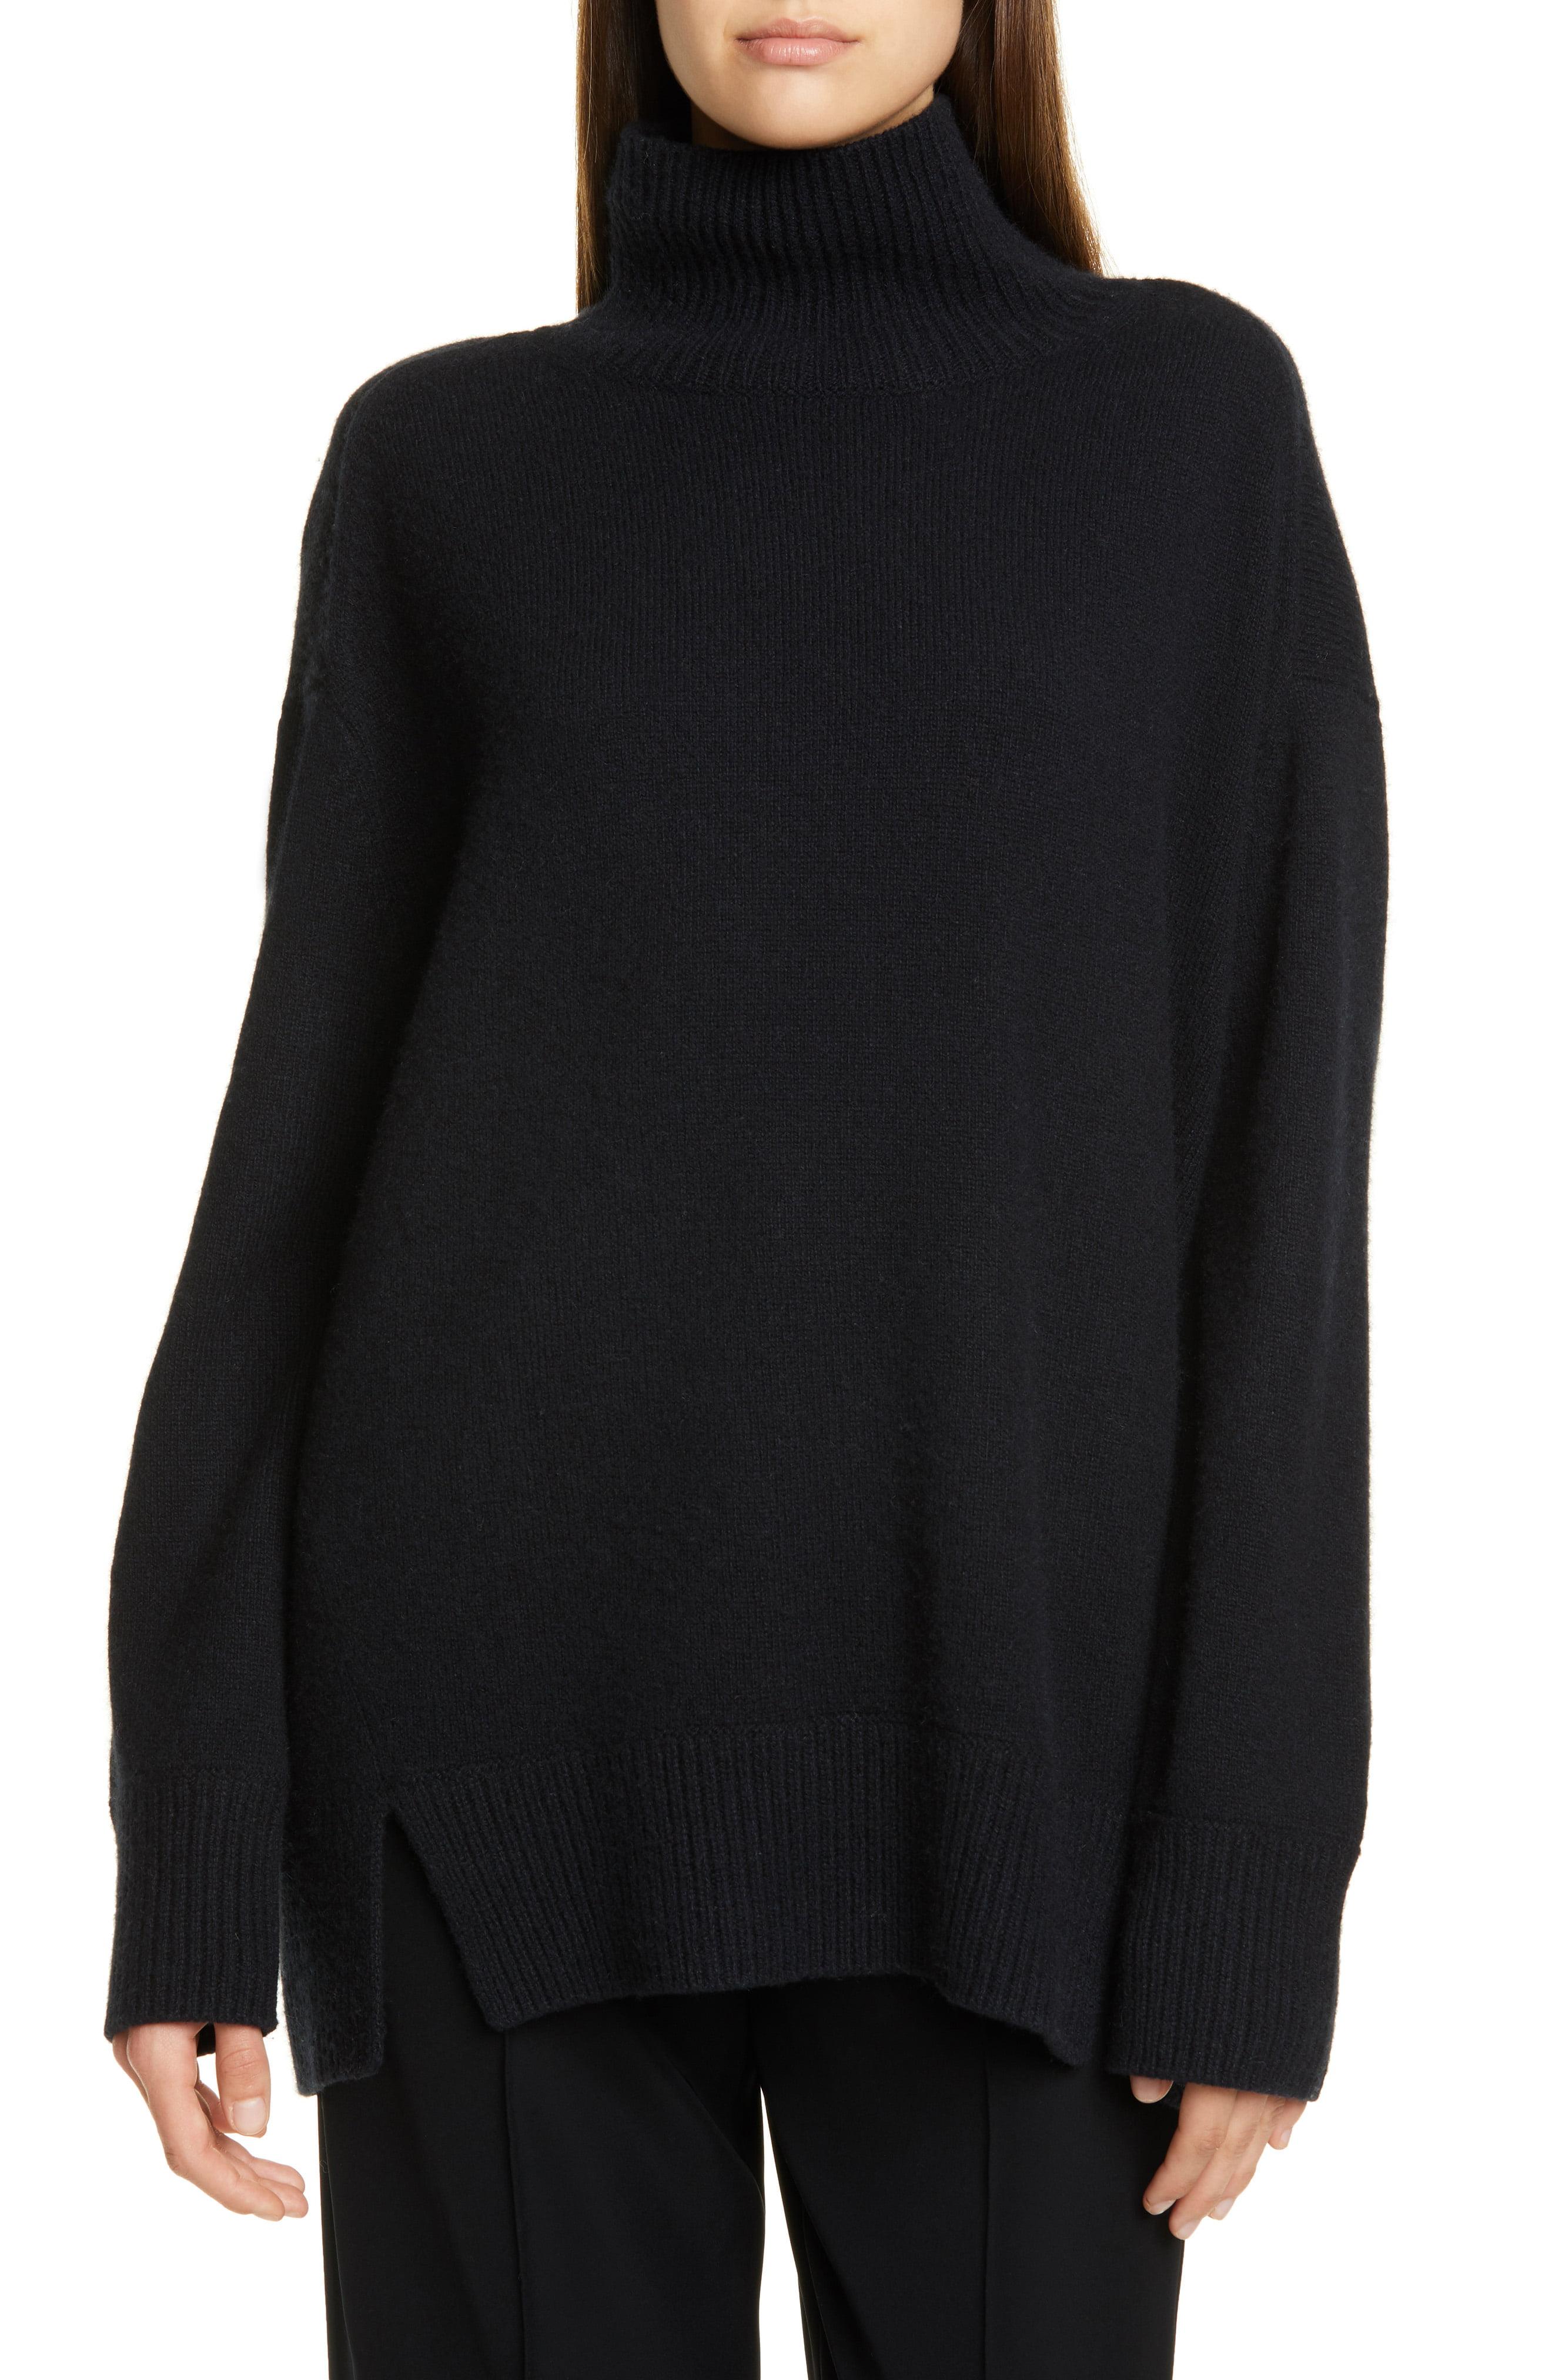 Vince Double Slit Cashmere Turtleneck Sweater in Black - Lyst